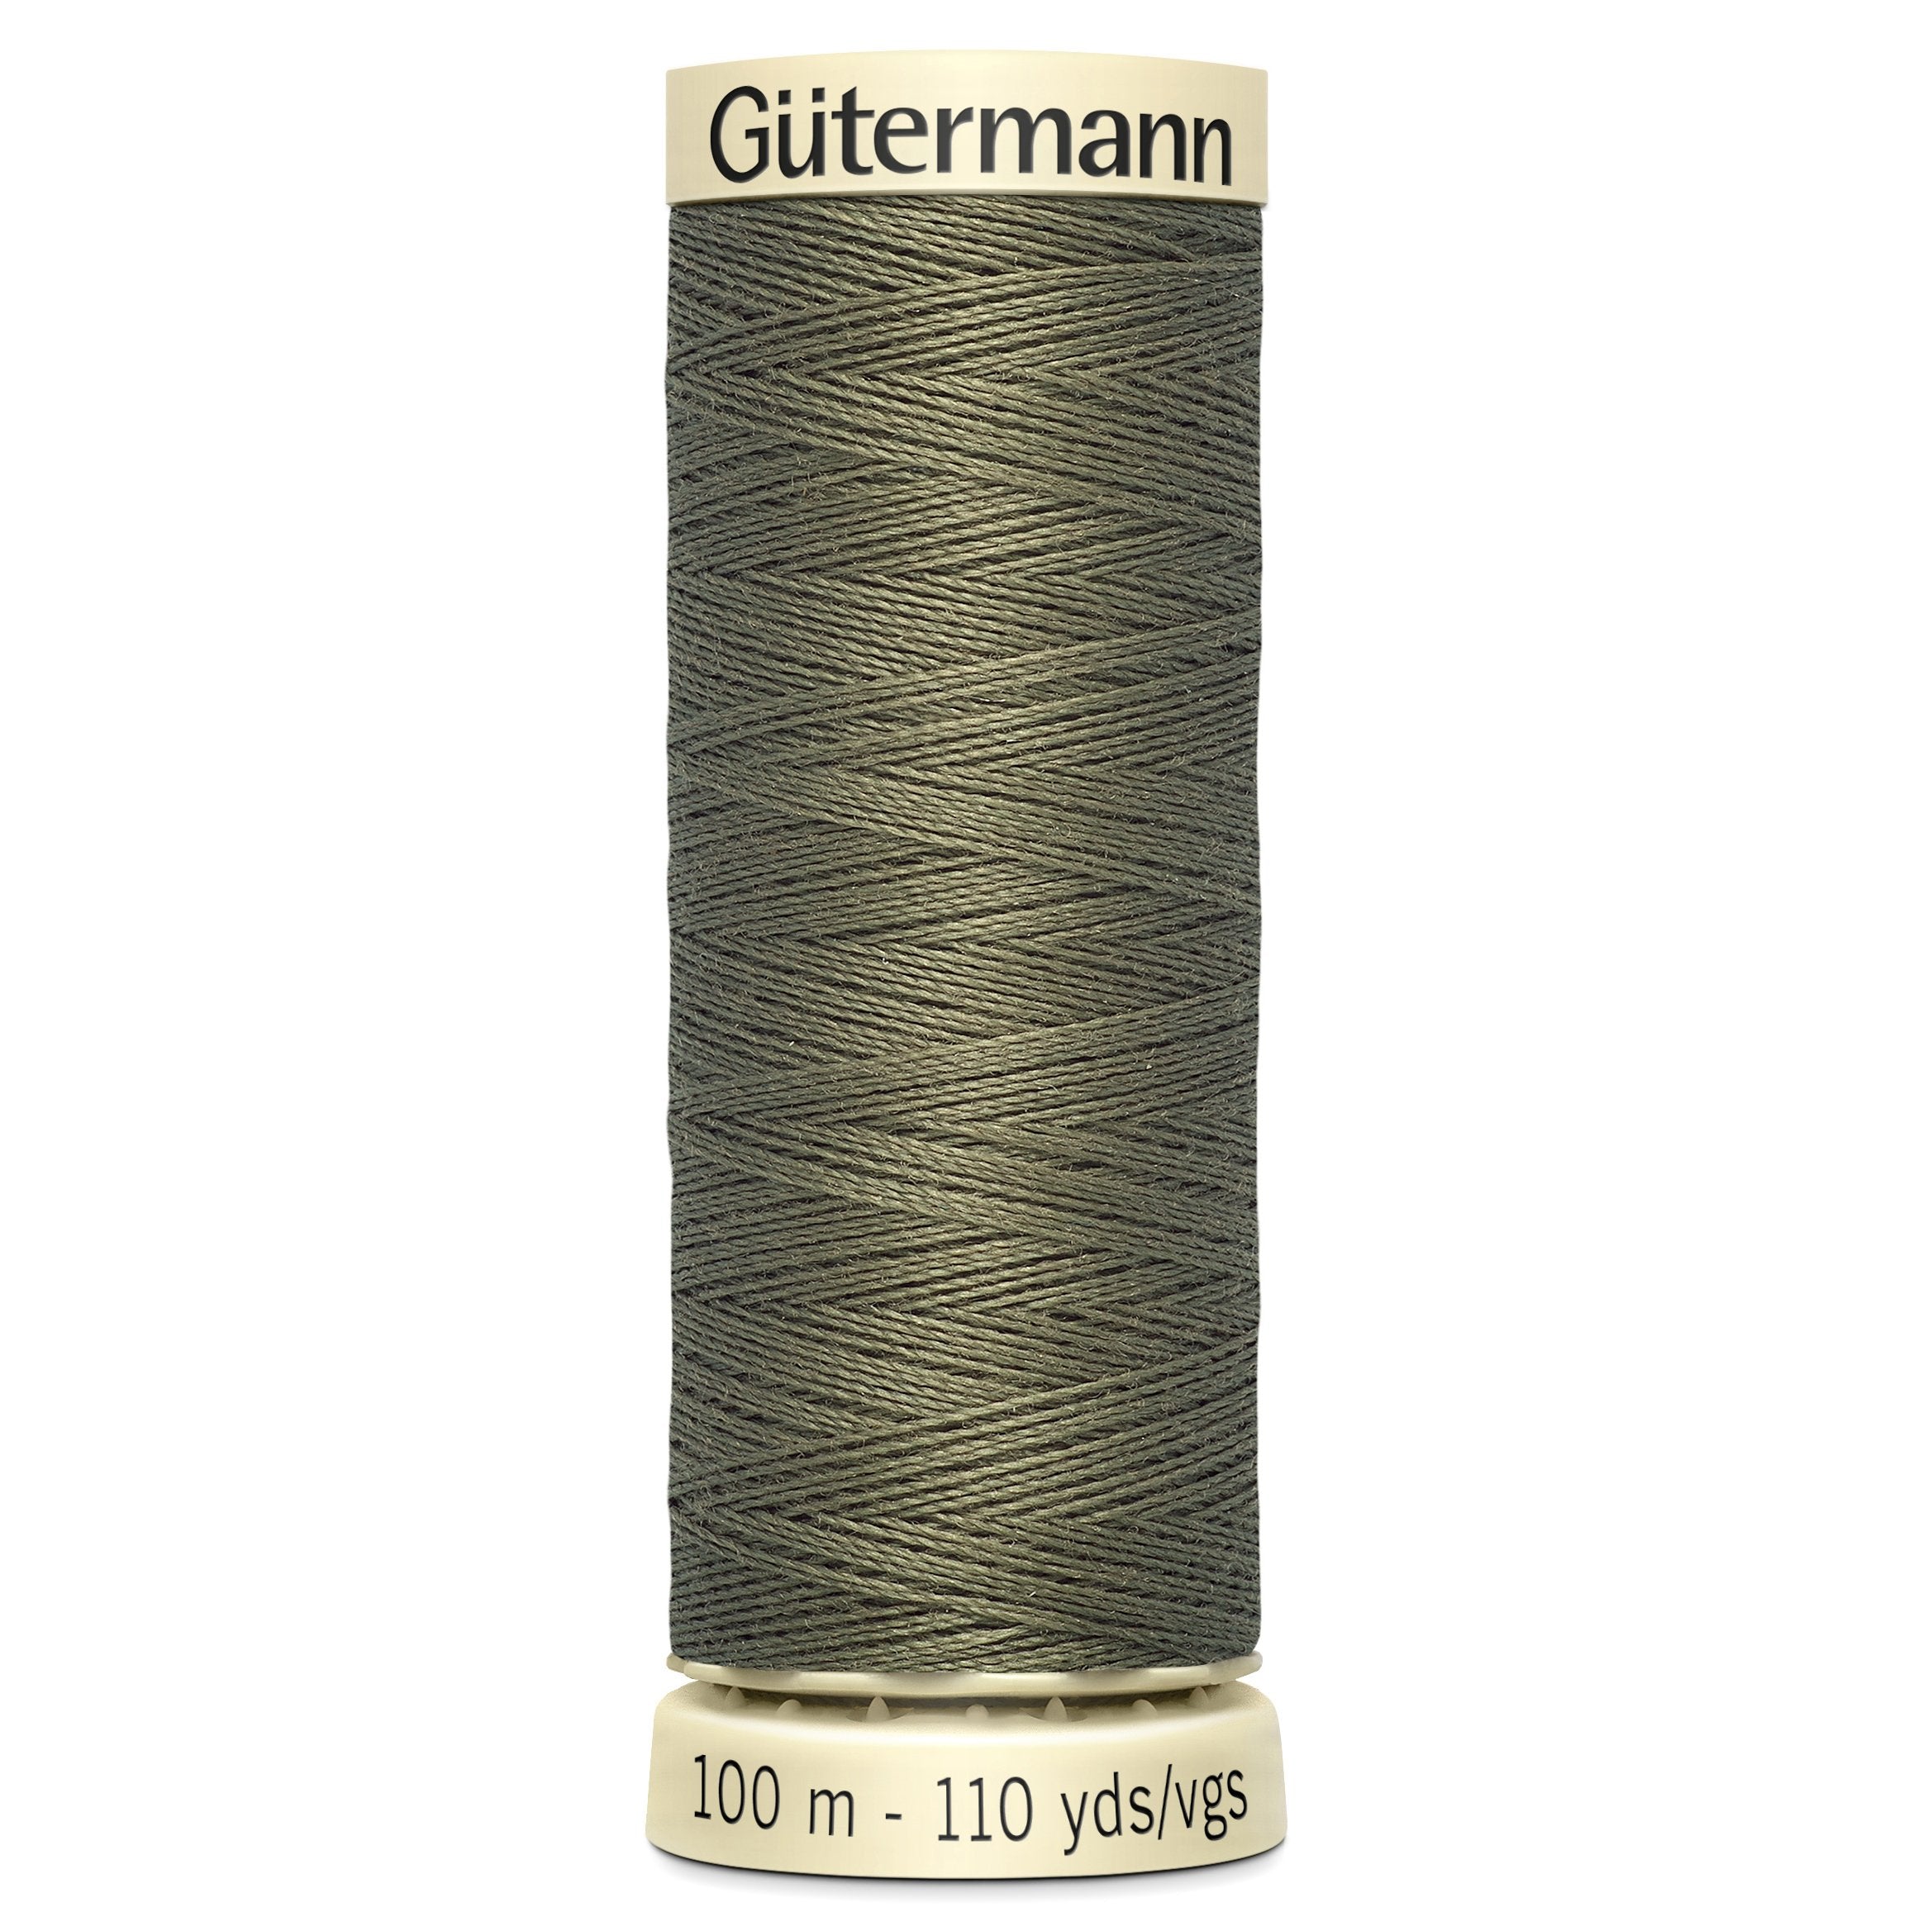 Gutermann Sew All Thread colour 825 Dark Khaki from Jaycotts Sewing Supplies